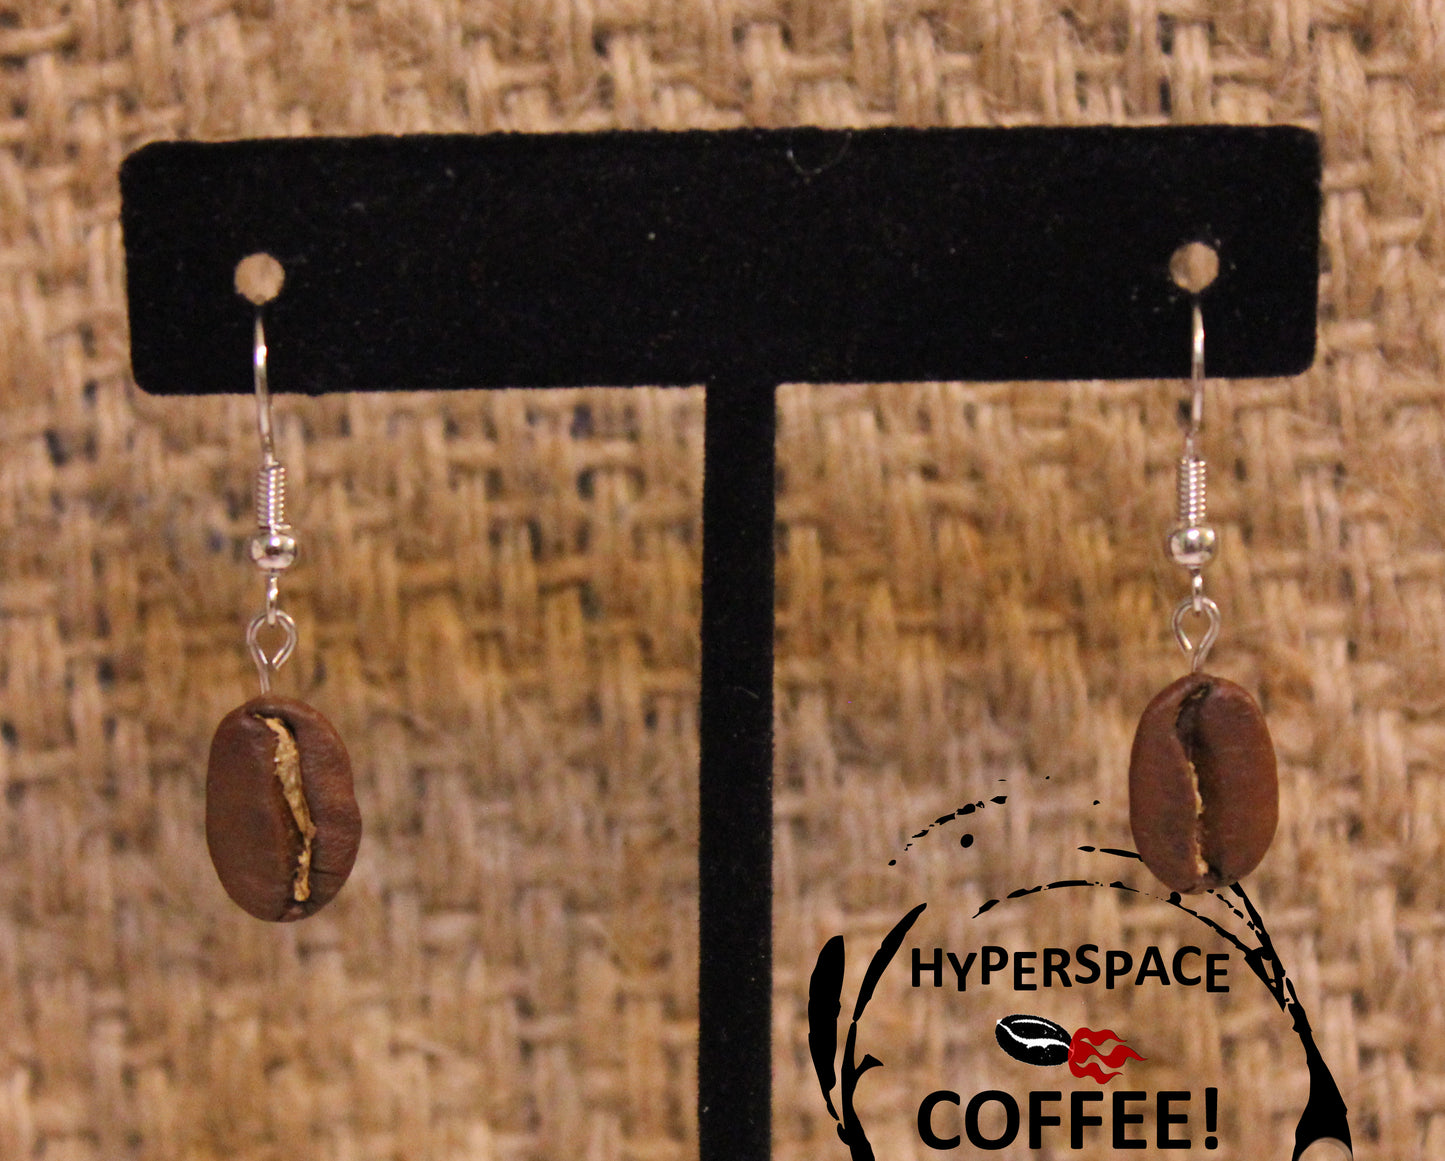 Real Coffee Bean Dangle Earrings - Silver Color Hooks